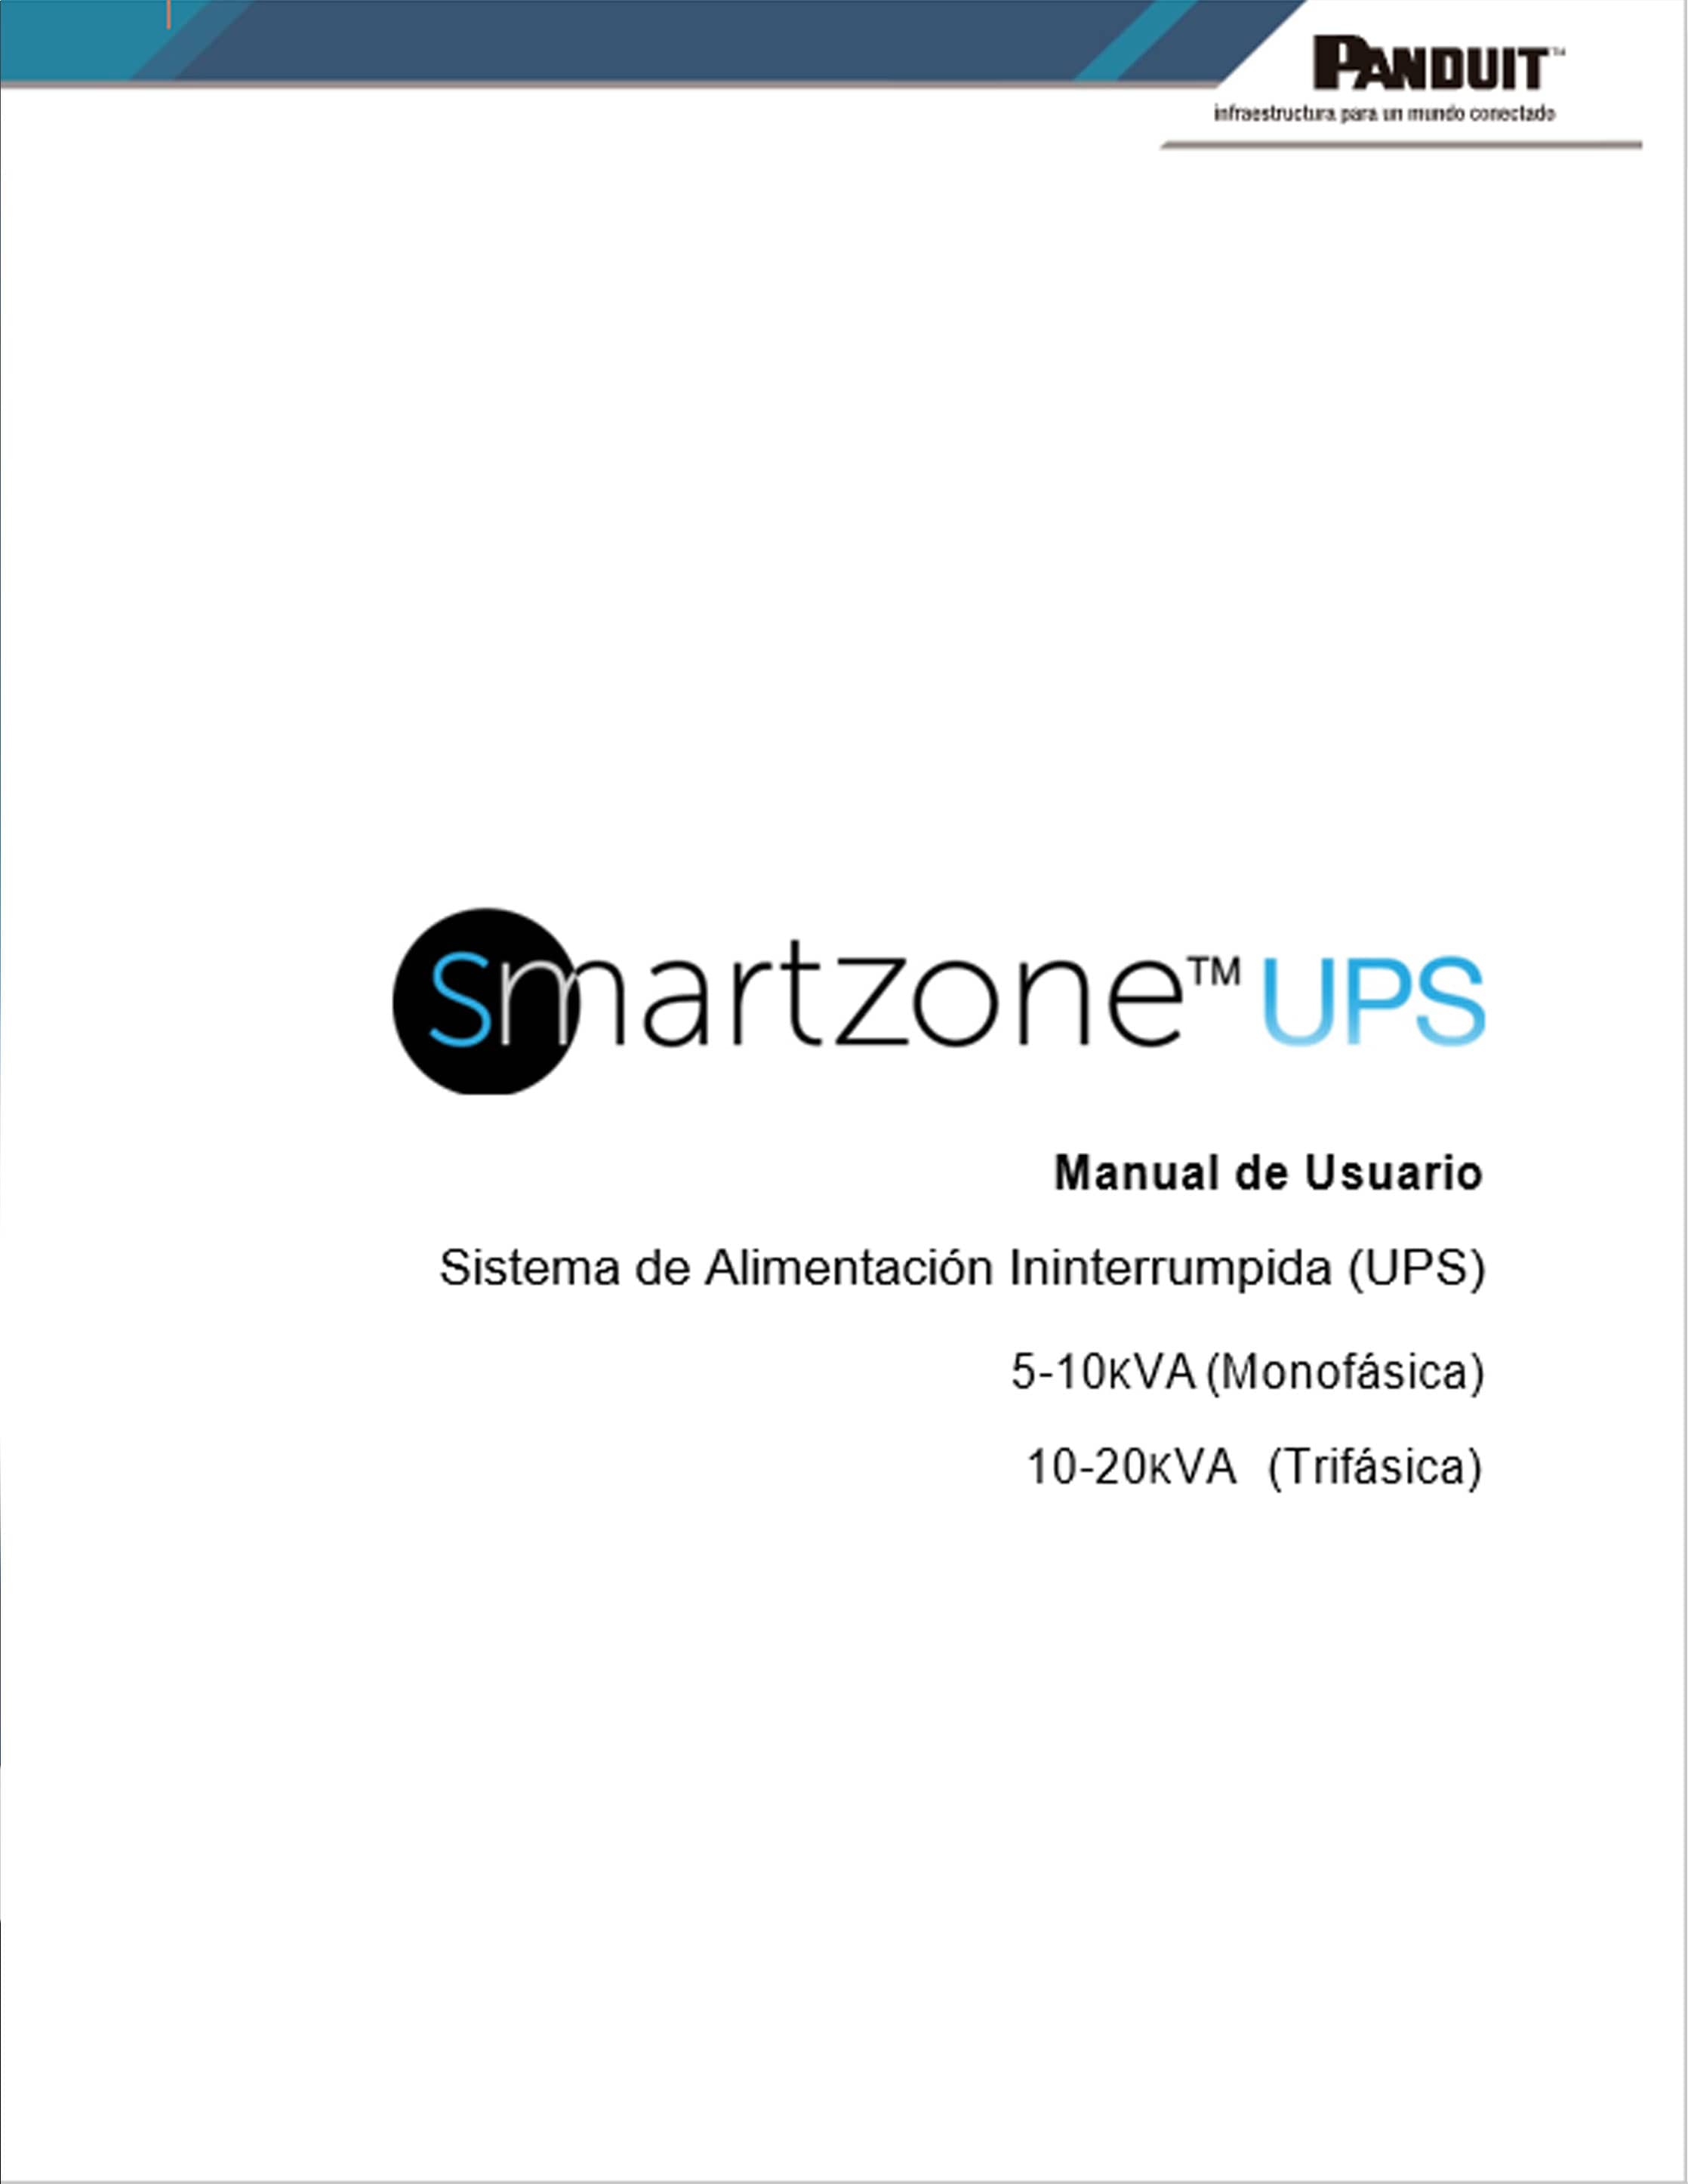 manual-SmarZone-UPS-sistema-de-alimentacion-ininterrumpida-5-10kVA-10-20kVA-Panduit.jpg